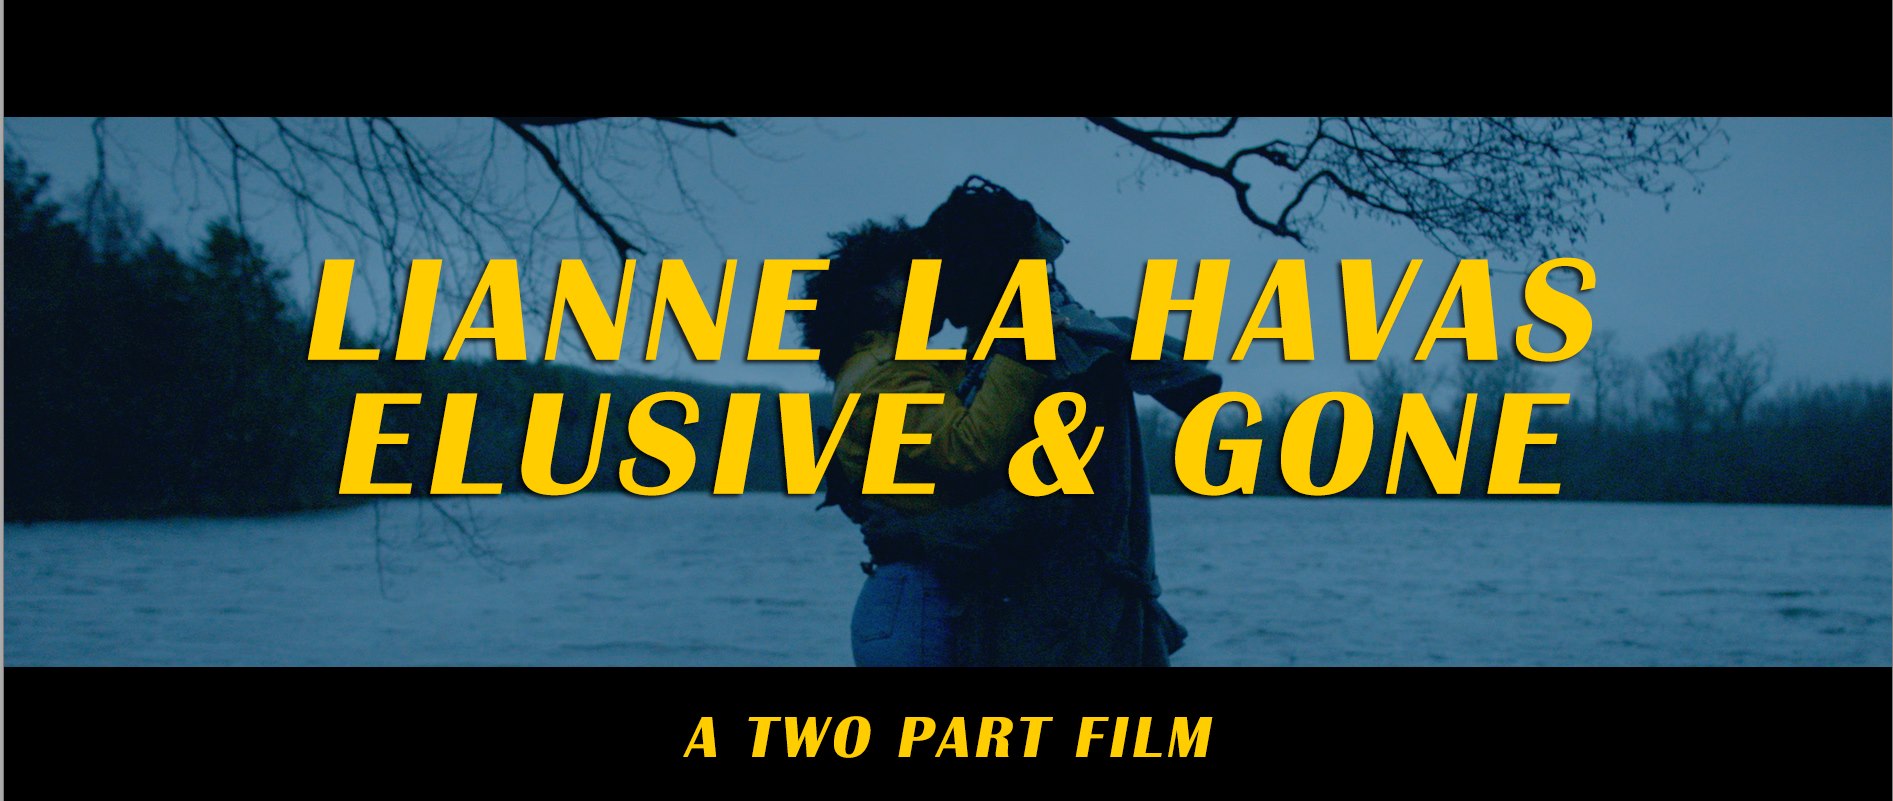 Lianne La Havas presenta un corto doble para Elusive y Gone